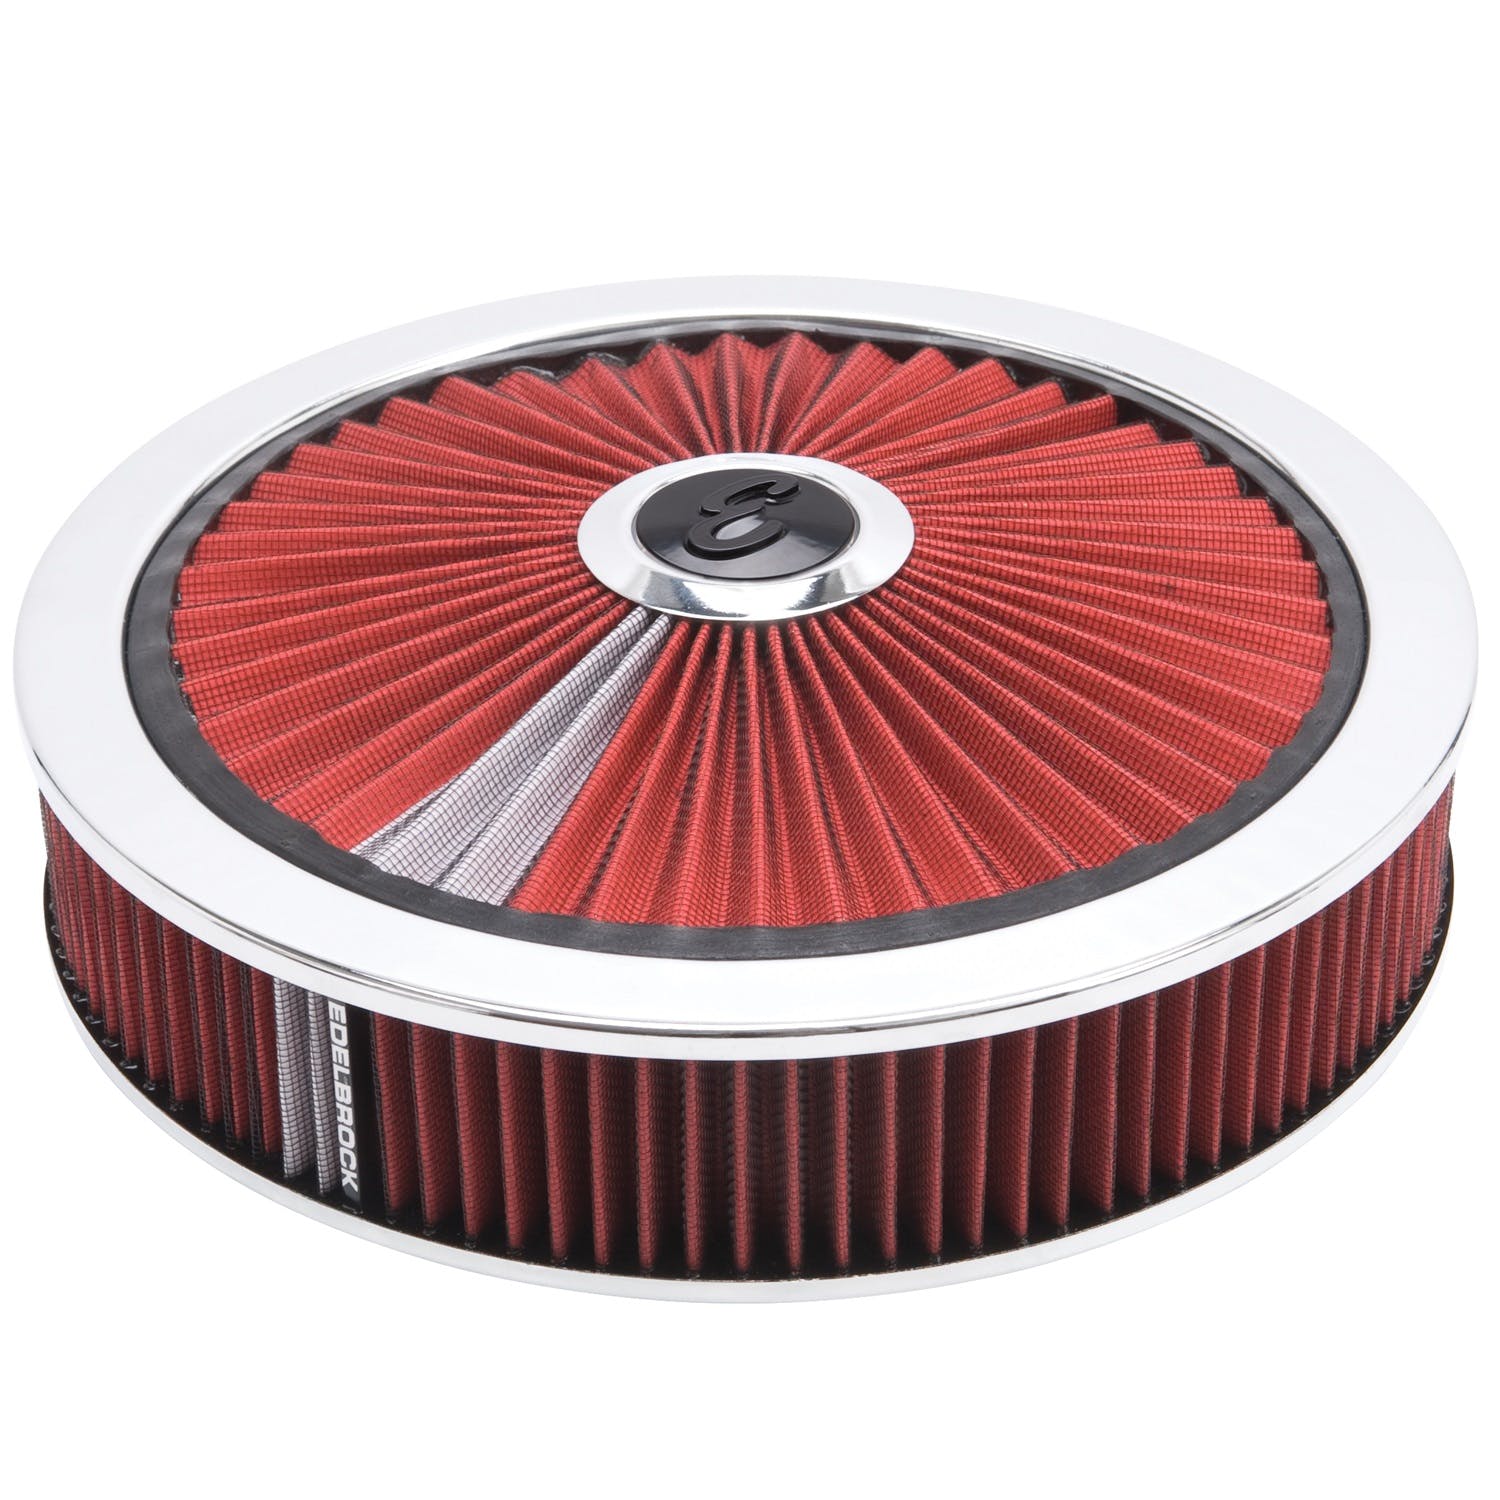 Edelbrock 43660 Pro-Flo Chrome Round 14 Air Cleaner - 3 Pro-Flo Element (Red)